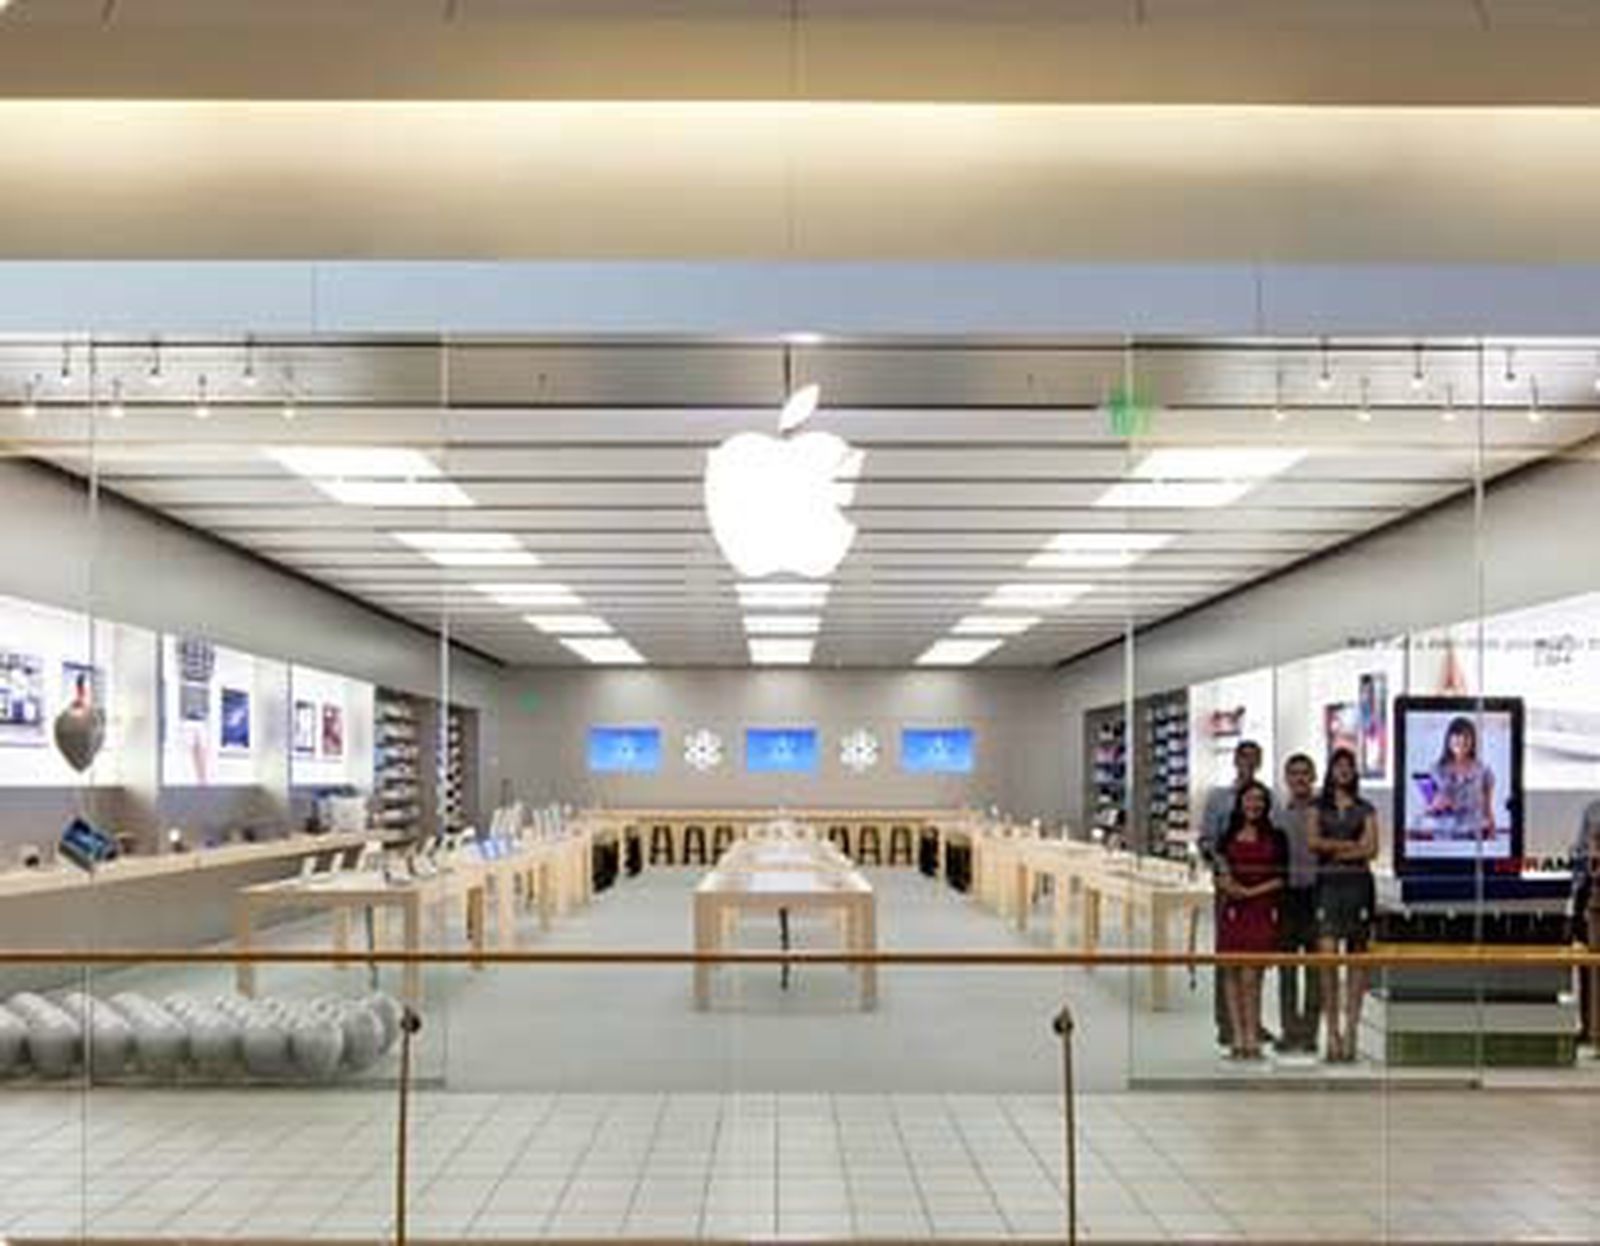 $16,000 Worth of iPhones Stolen from Charlotte Apple Store in Apparent  Inside Job - MacRumors